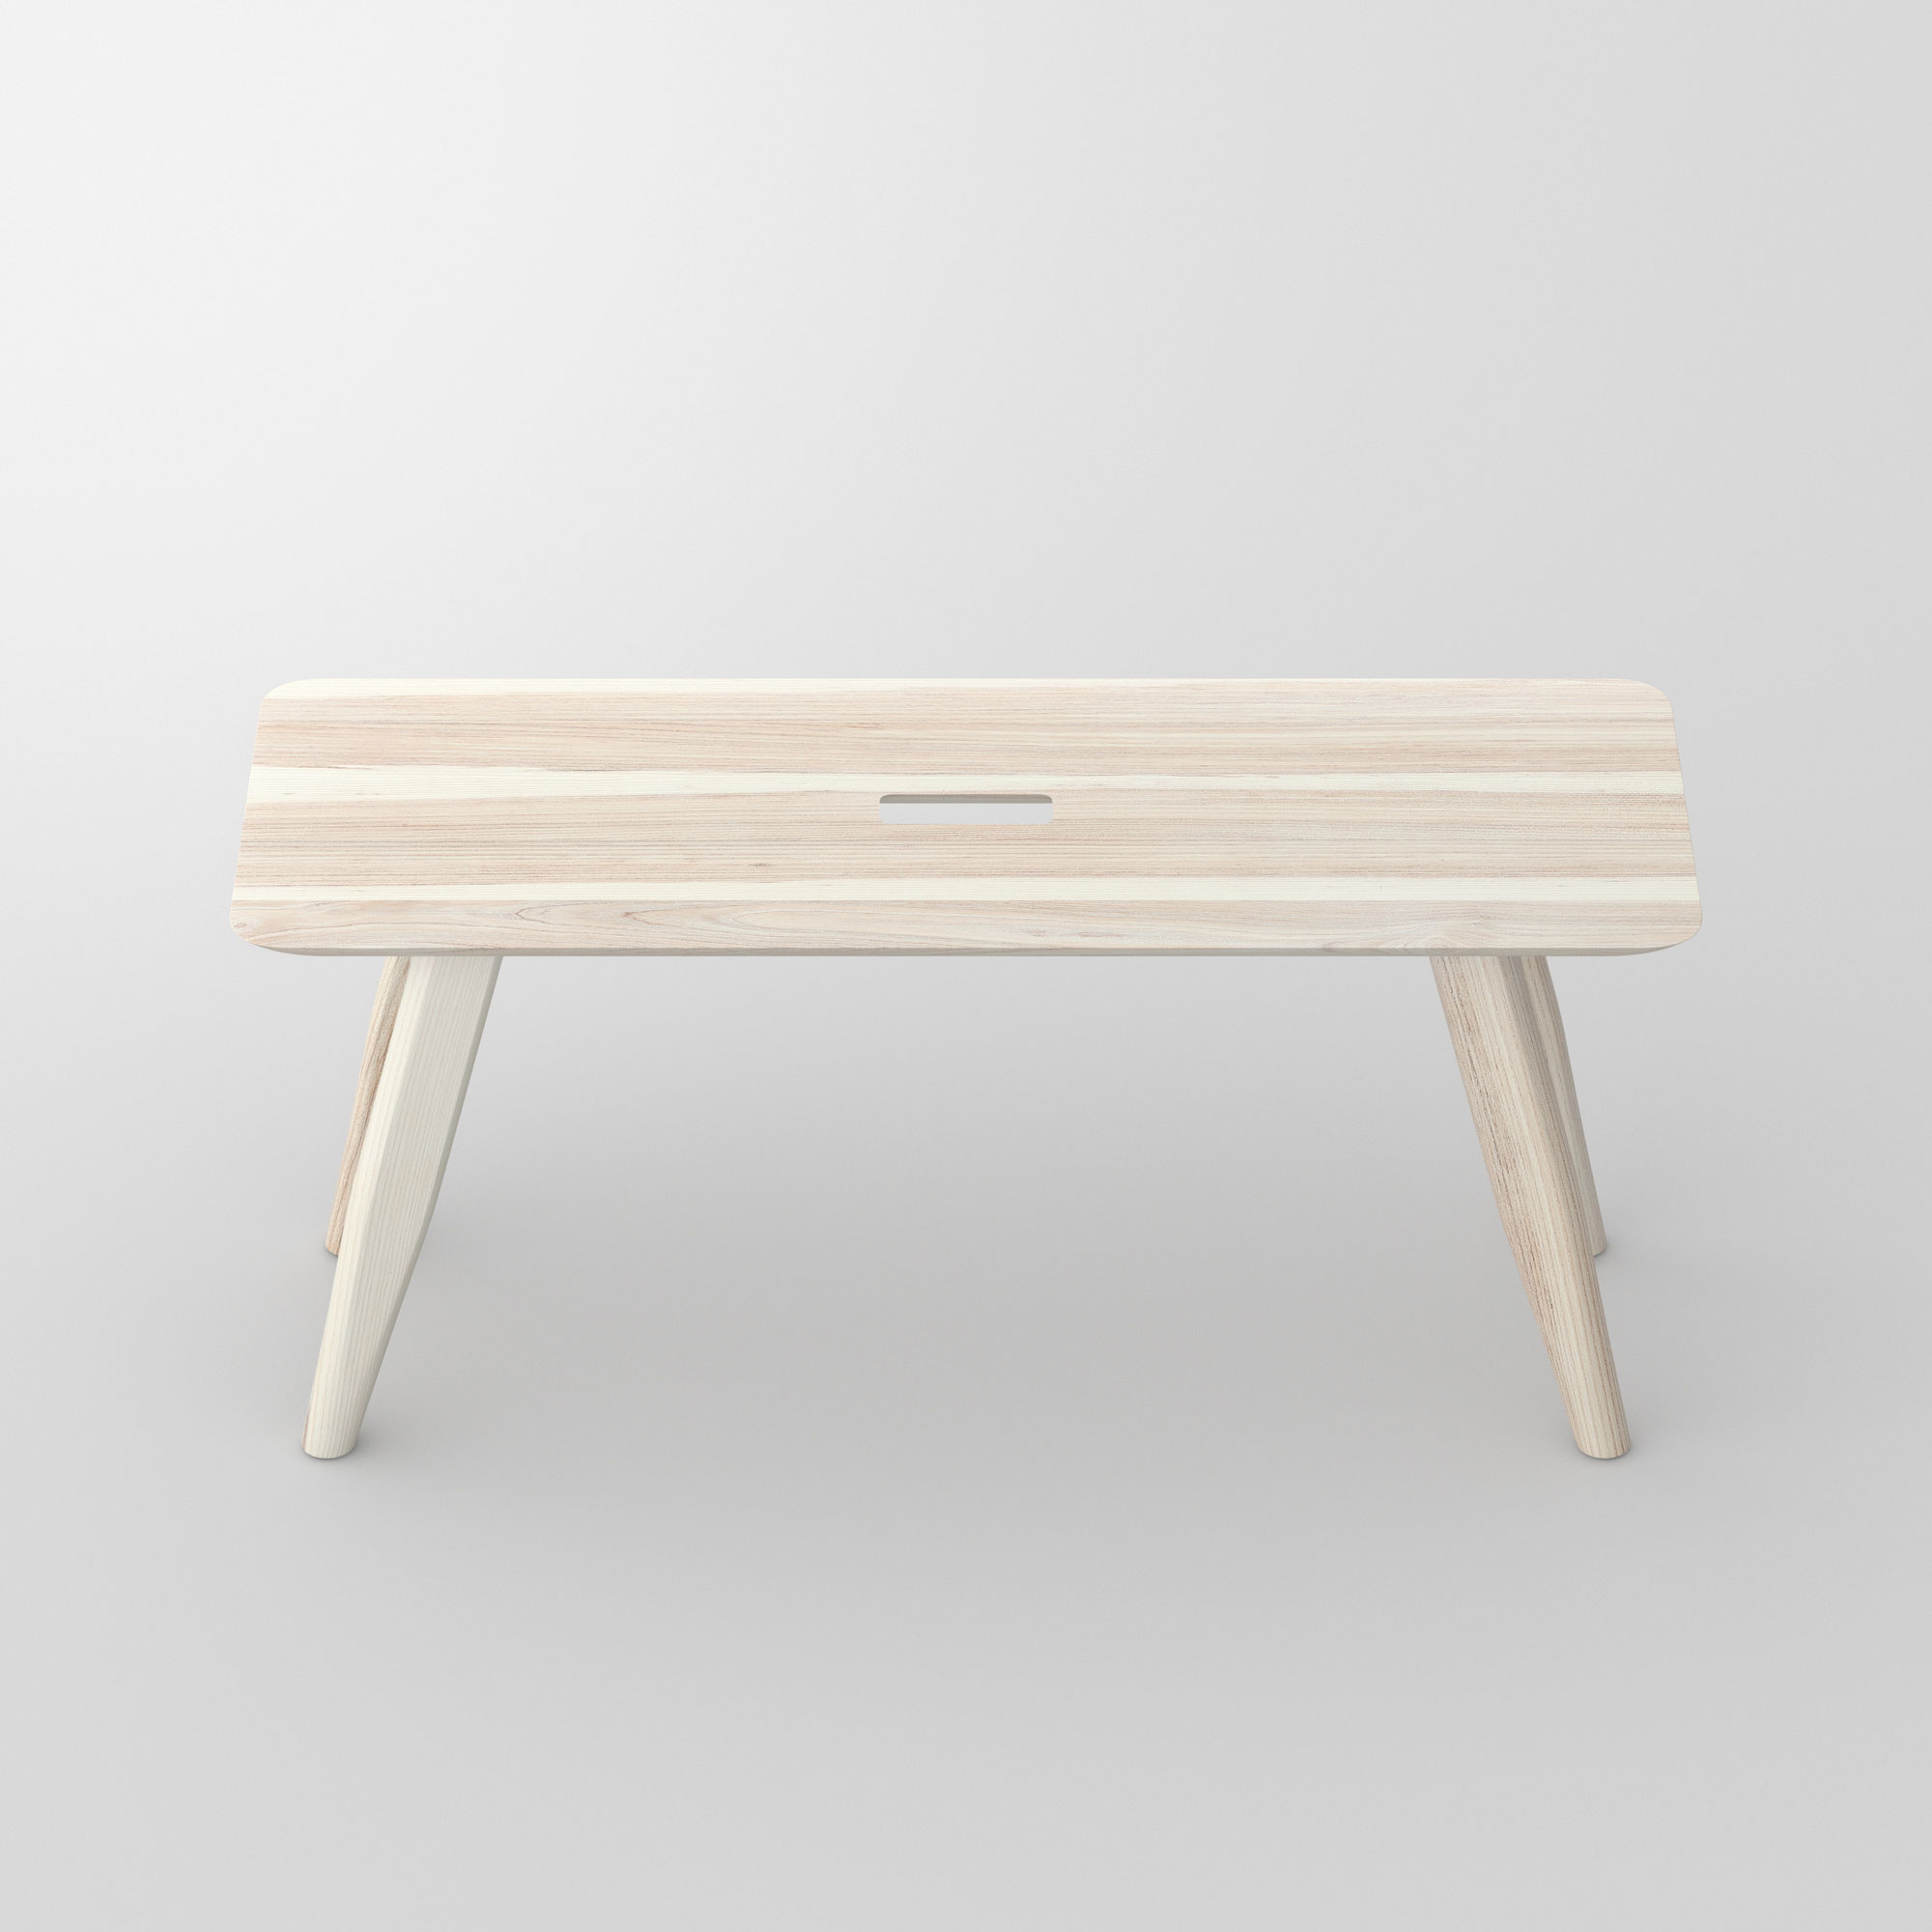 Designer Bench AETAS cam2 custom made in solid wood by vitamin design